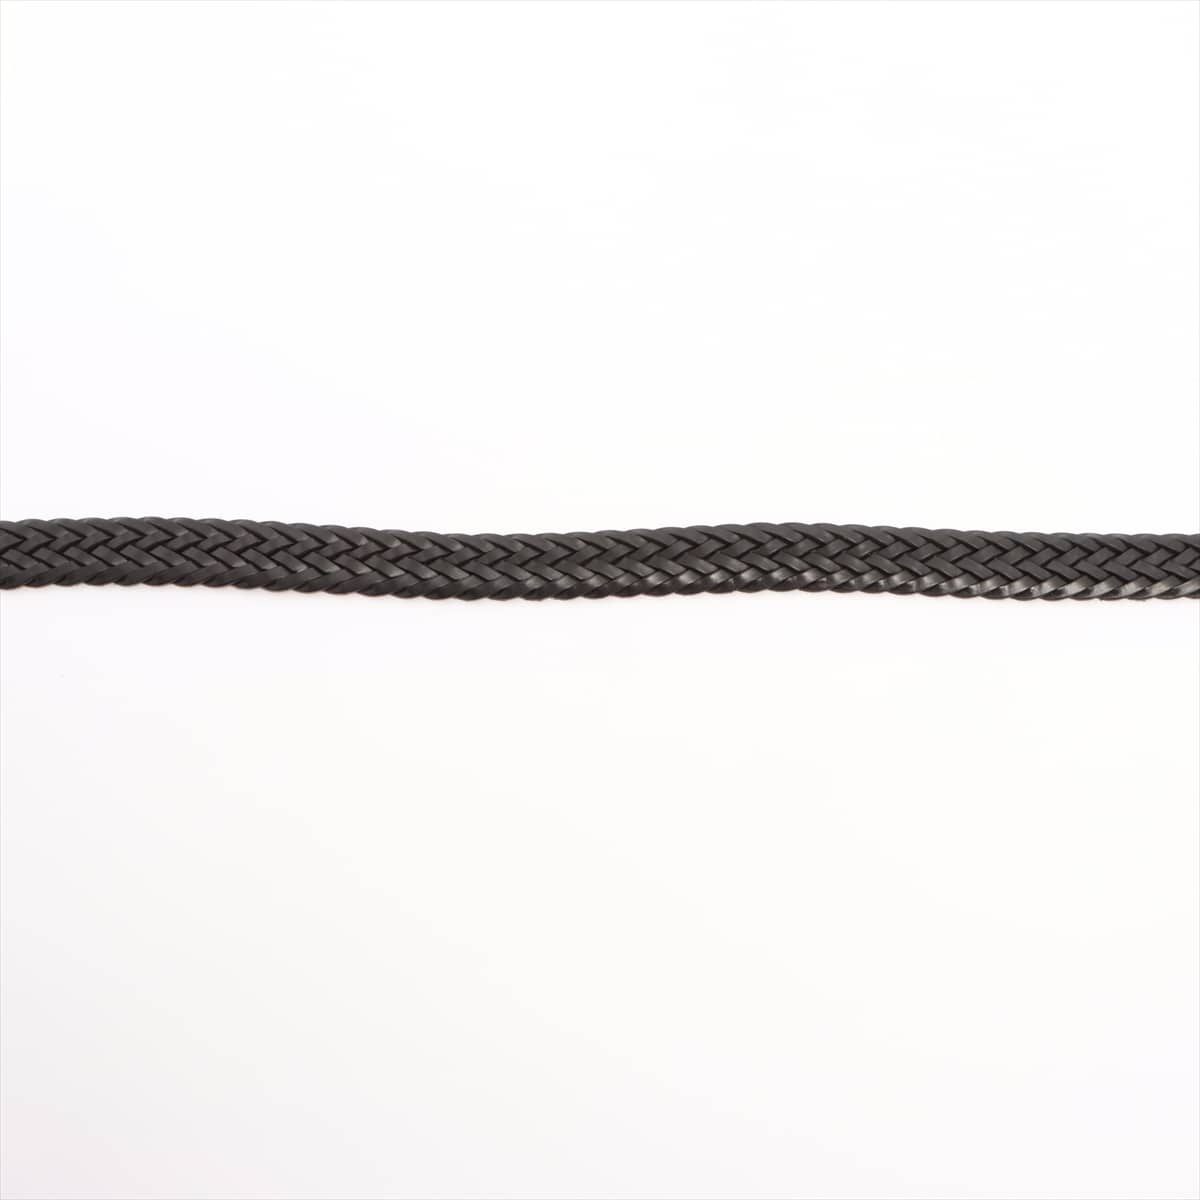 J&M Davidson Intrecciato Belt 85/34 Leather Black × Silver knitting